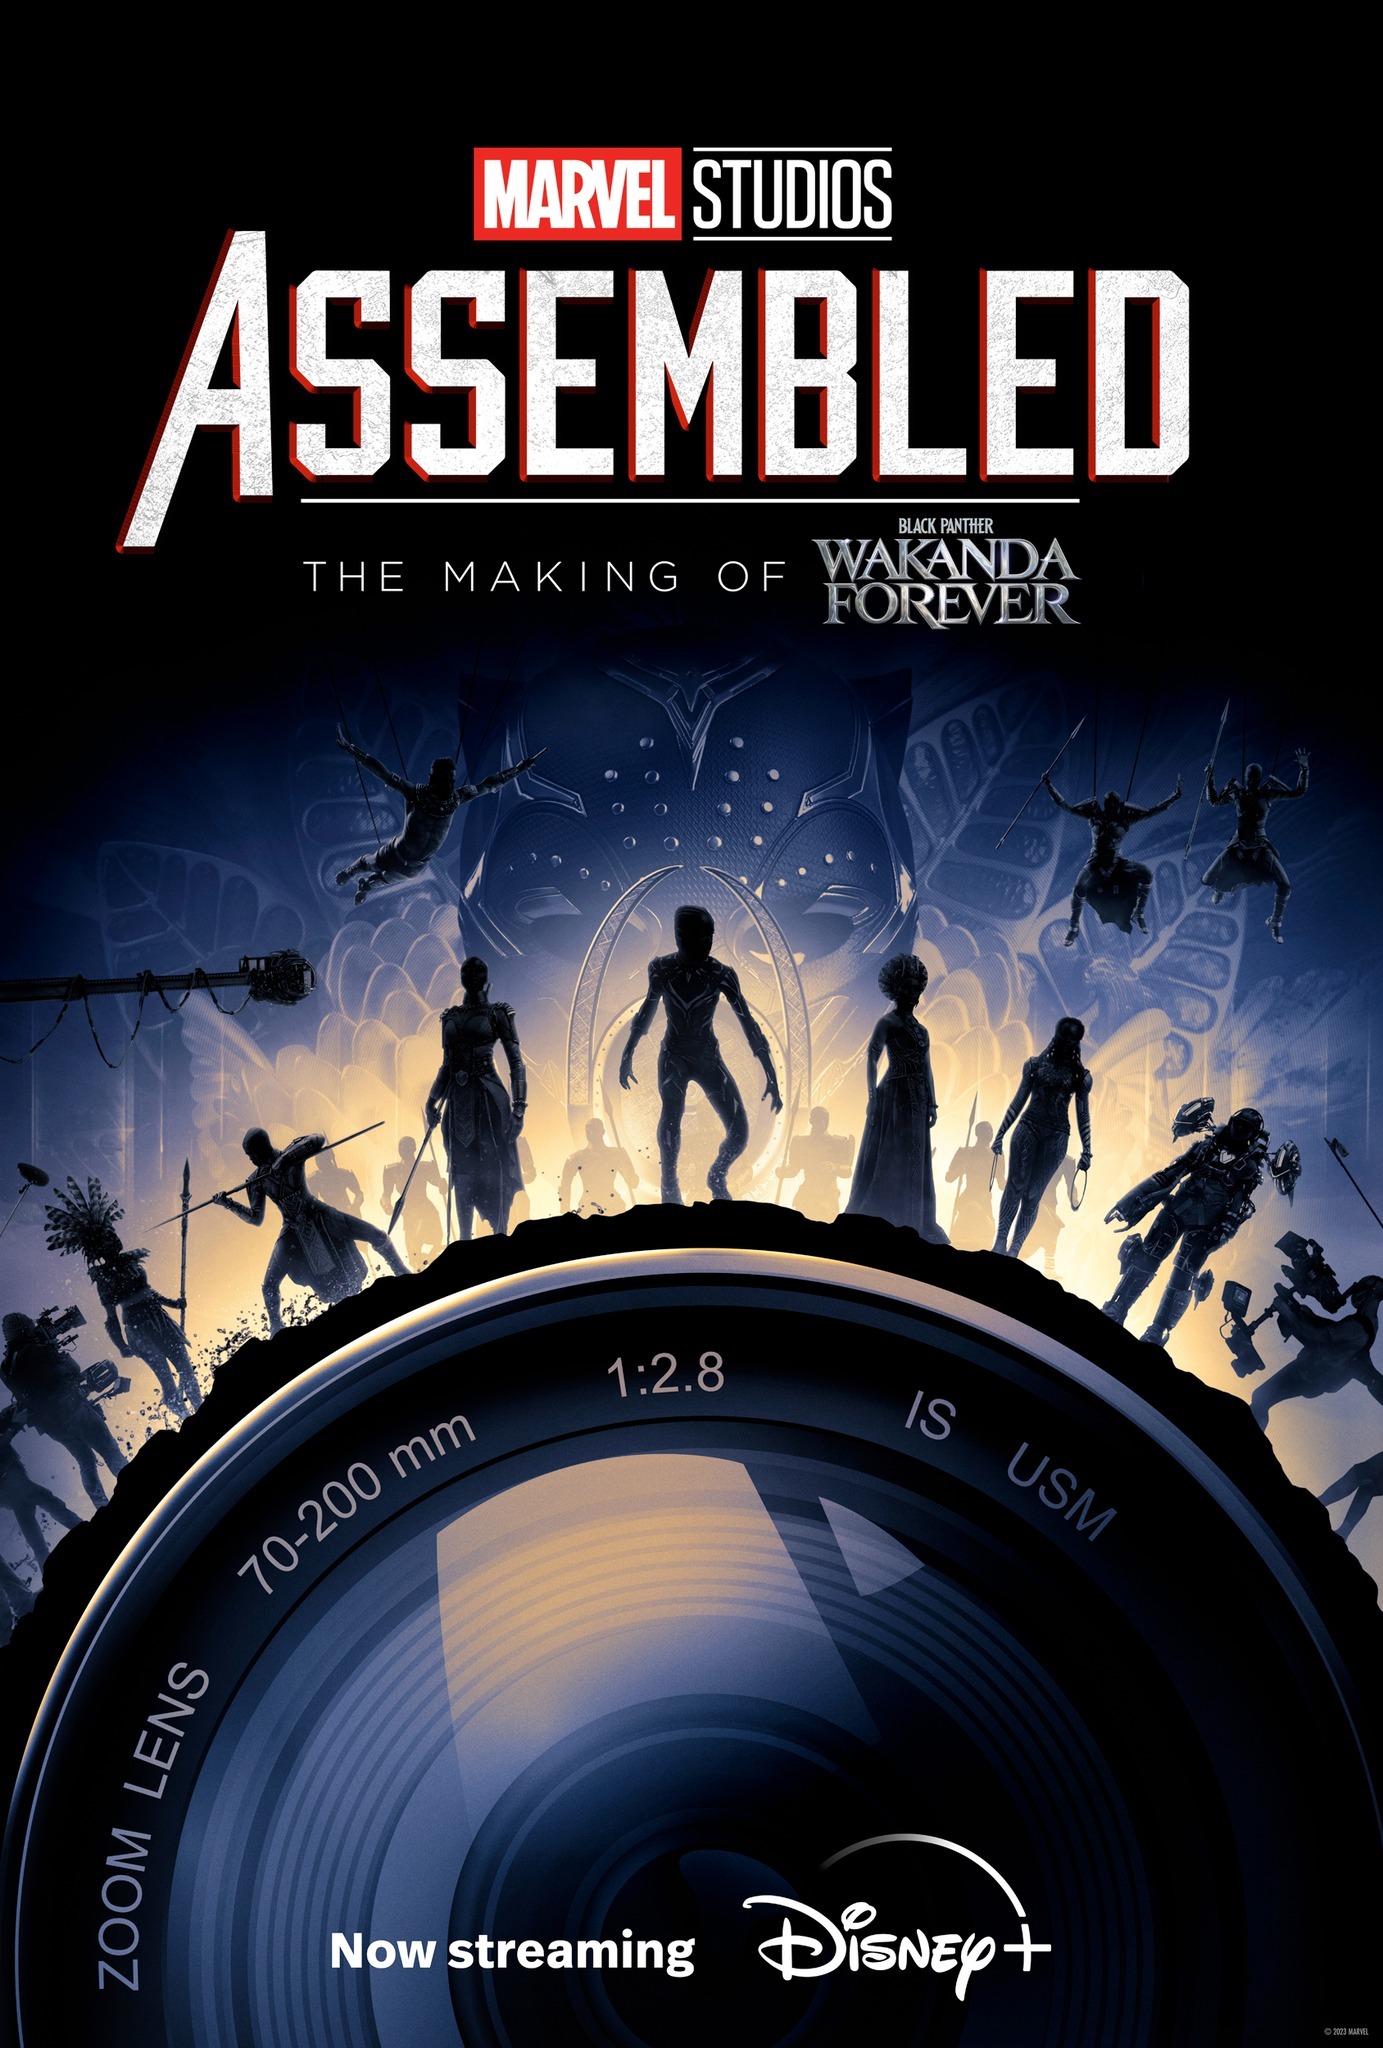 Mega Sized TV Poster Image for Marvel Studios: Assembled (#14 of 21)